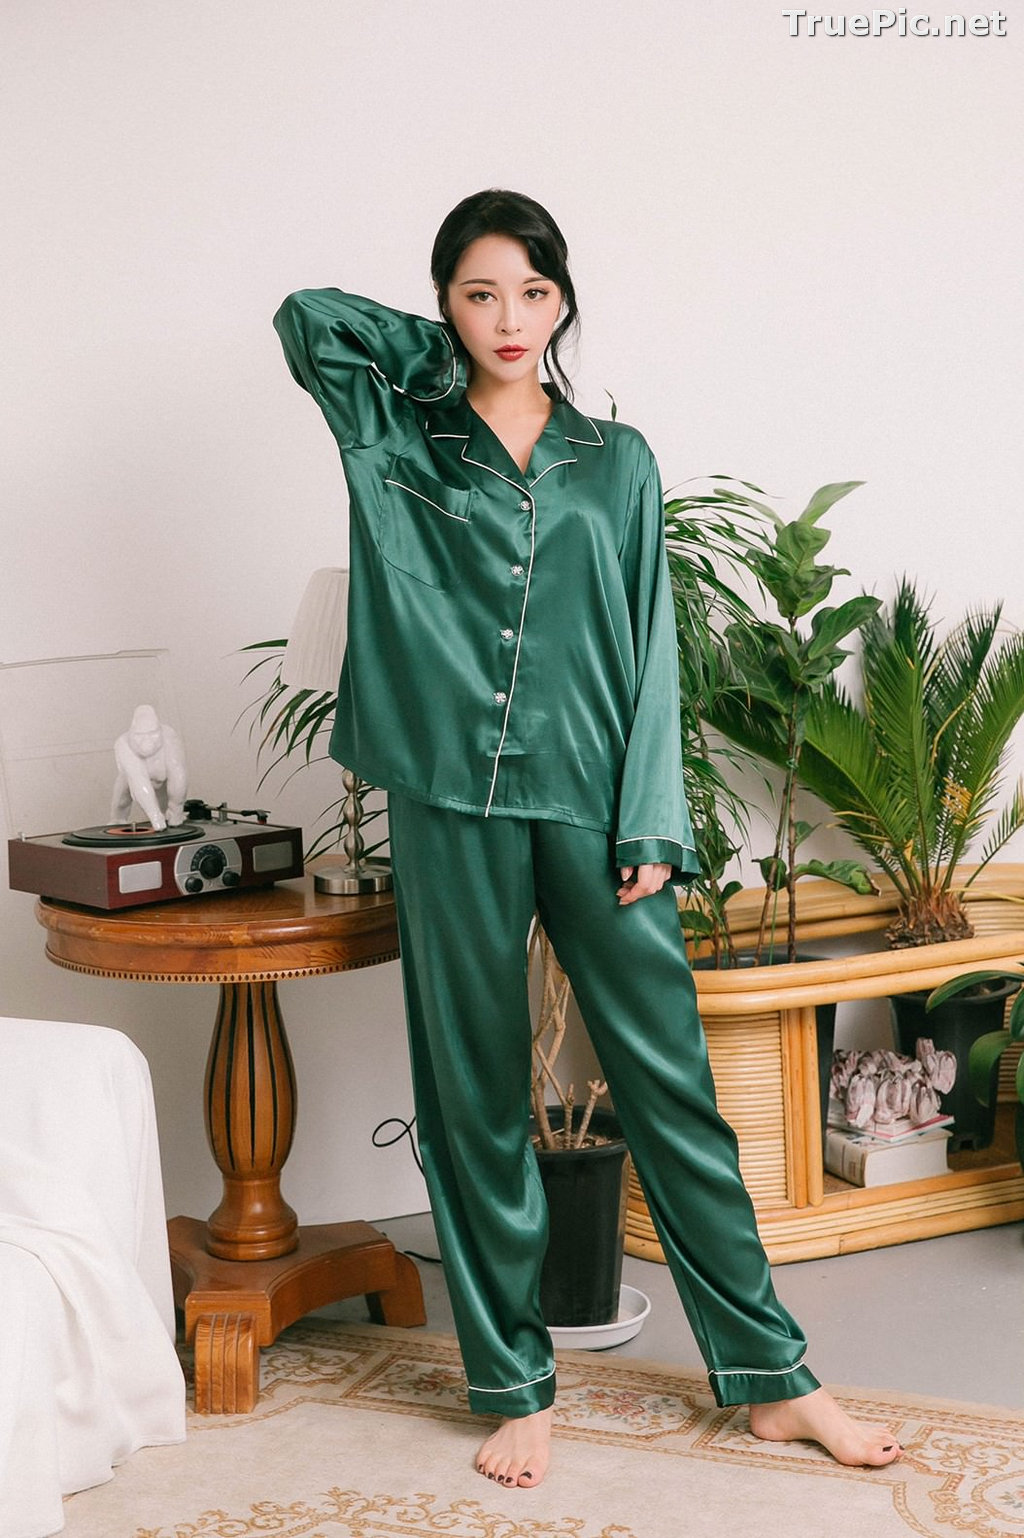 Image Ryu Hyeonju - Korean Fashion Model - Pijama and Lingerie Set - TruePic.net - Picture-27